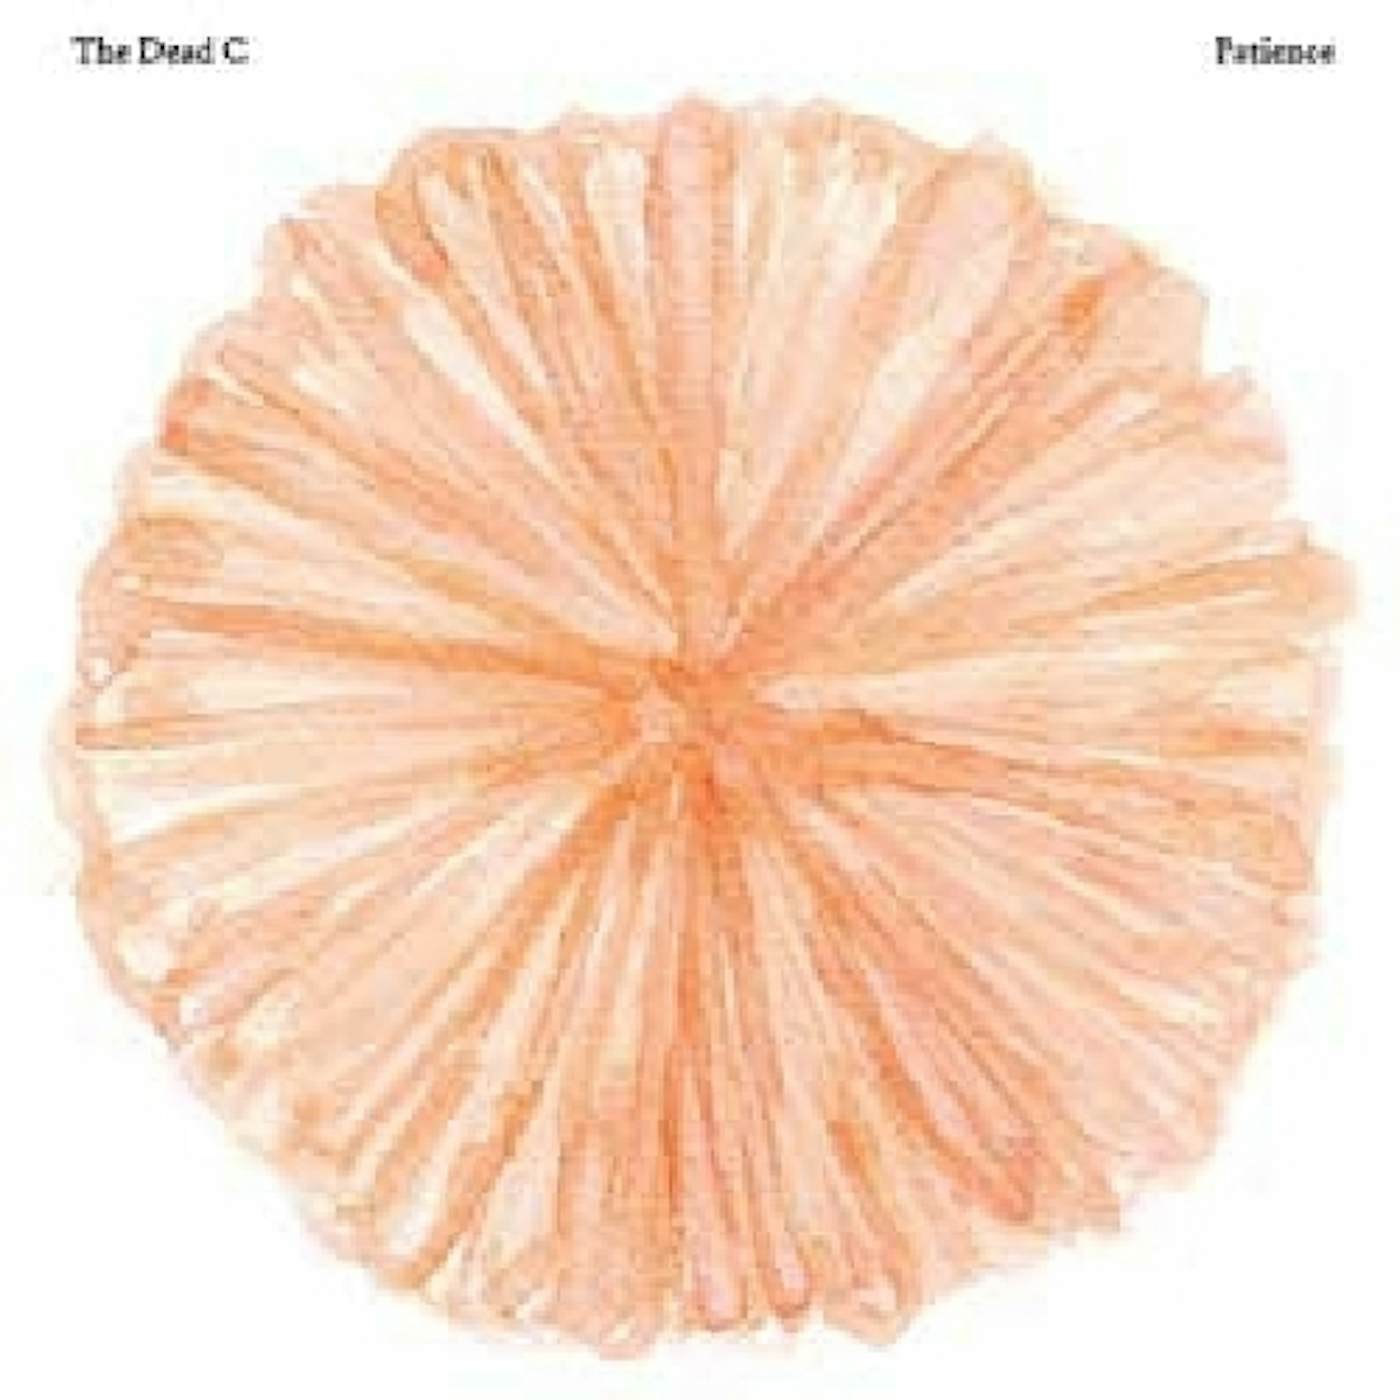 The Dead C PATIENCE CD